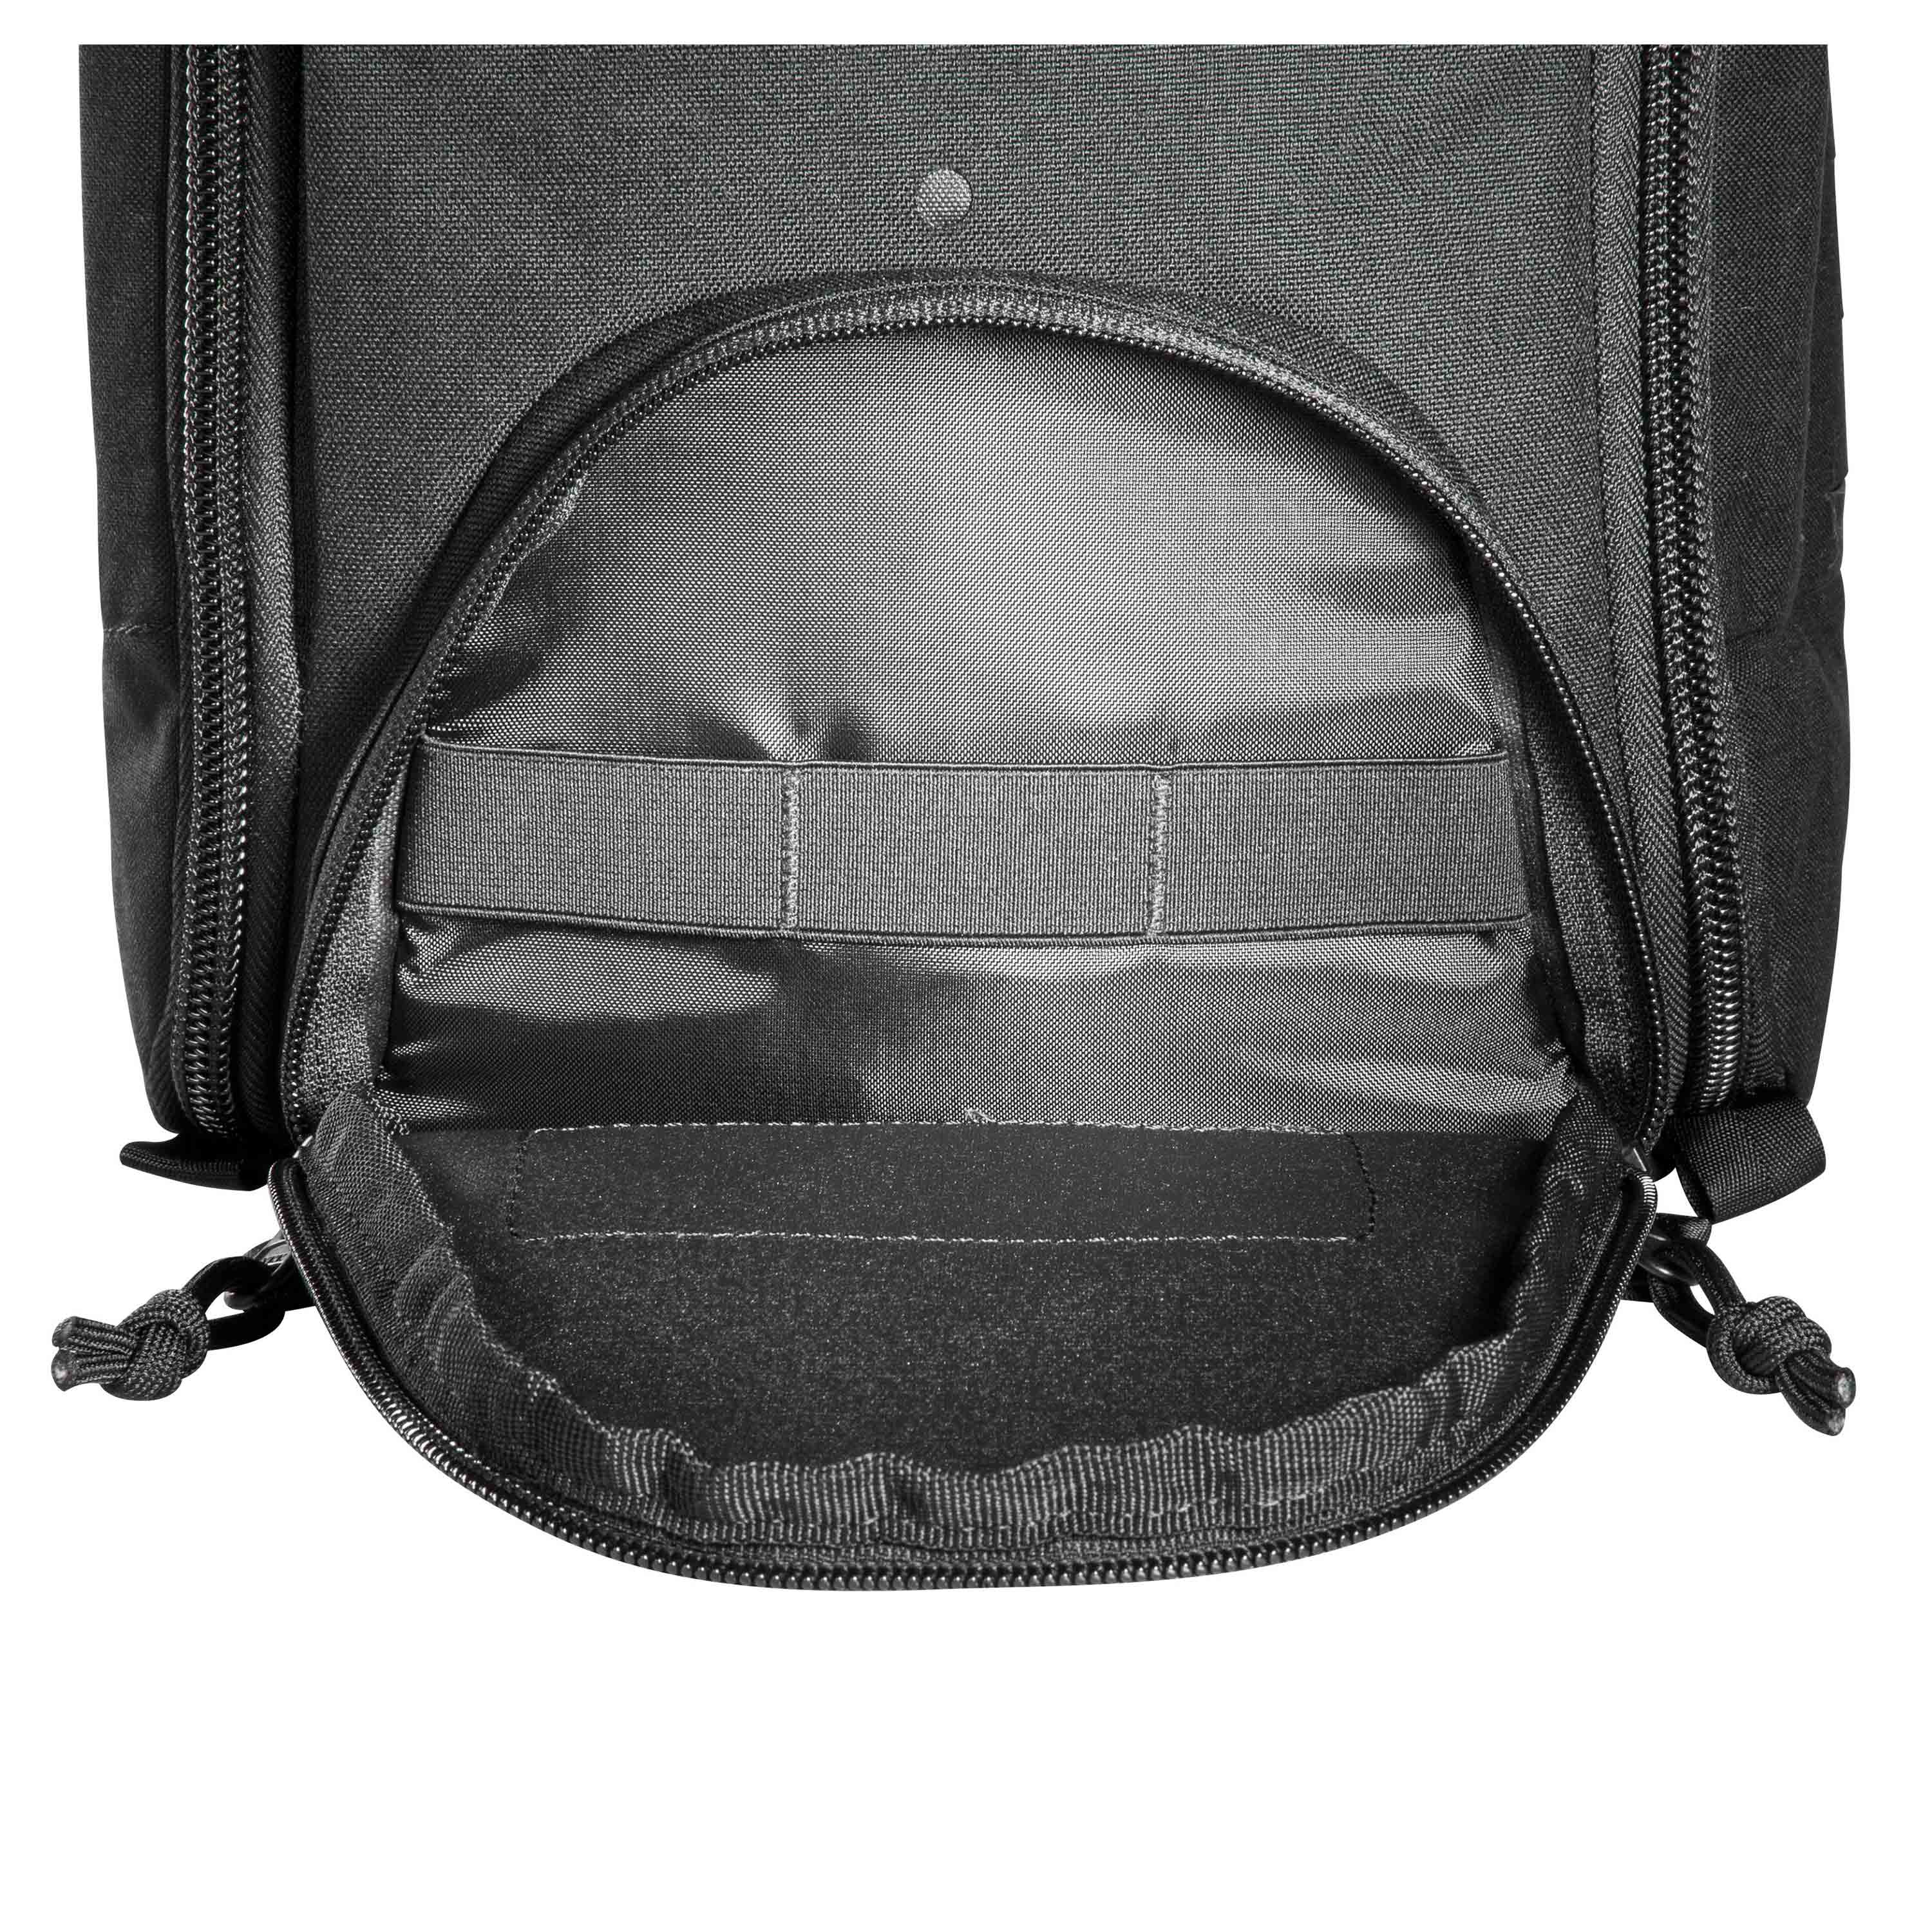 Purchase the Tasmanian Tiger Backpack Modular Daypack XL black b